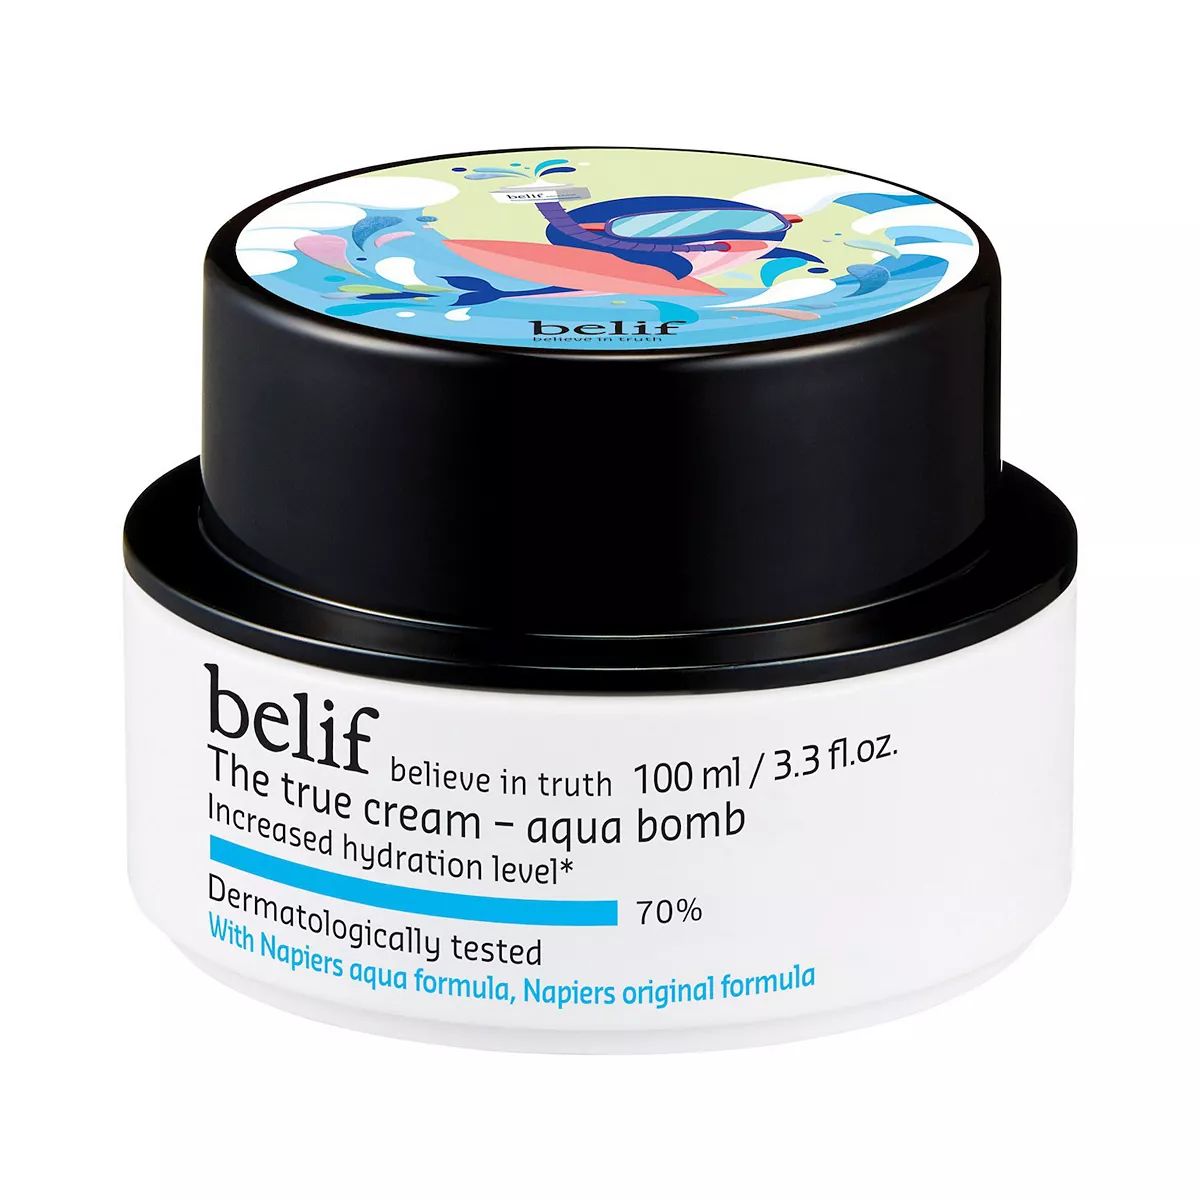 belif The True Cream Aqua Bomb | Kohl's